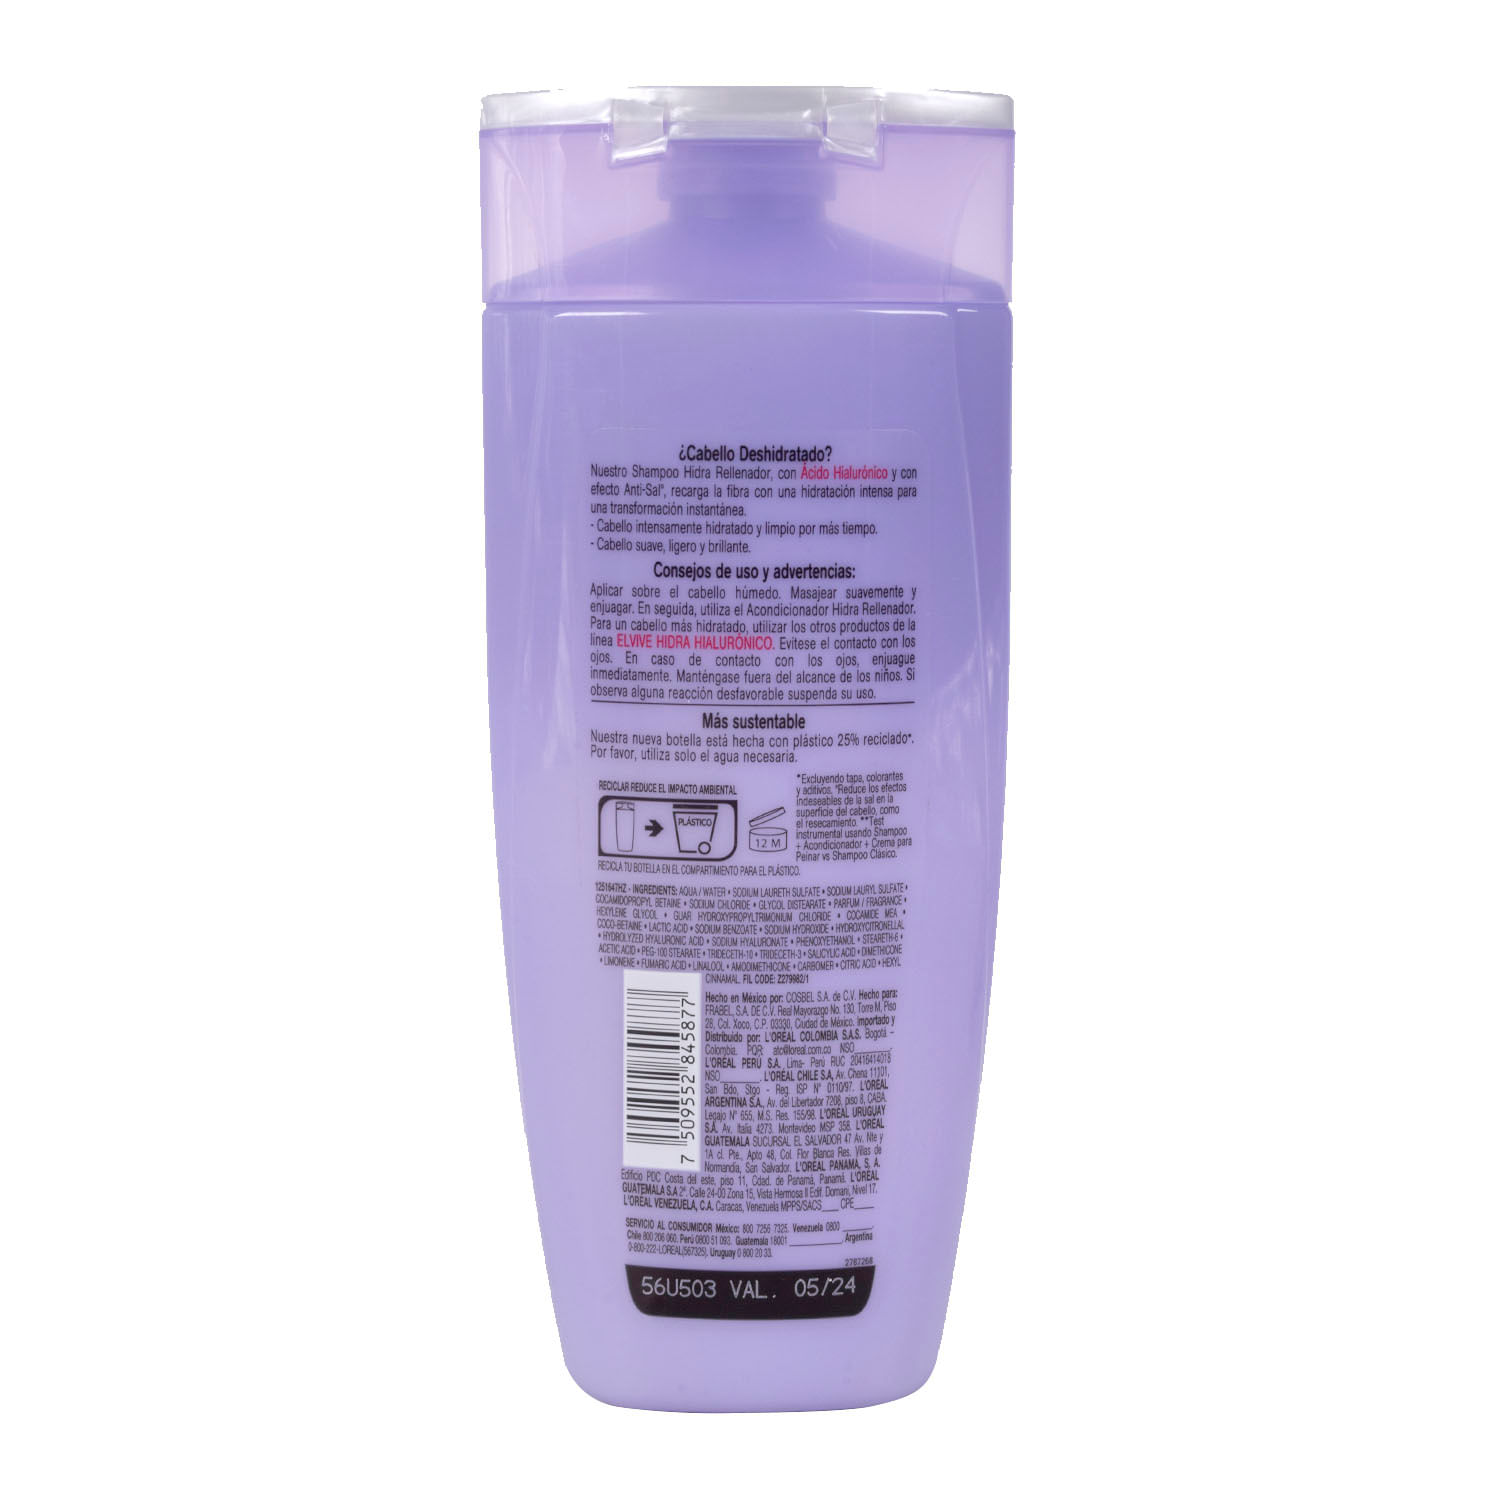 Shampoo Elvive Hidra Hialuronico 200 ml